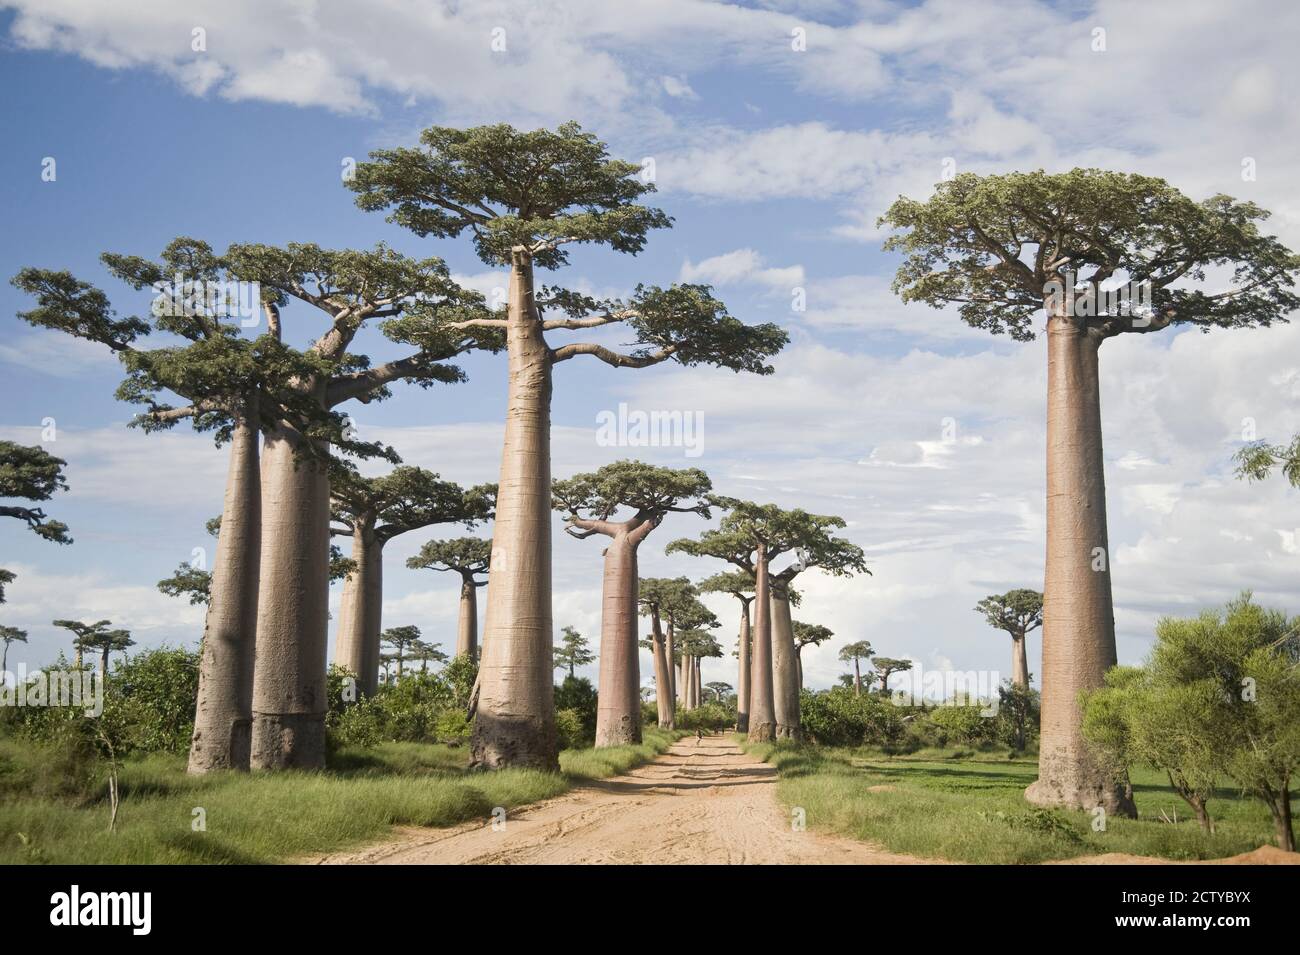 Baobab trees (Adansonia digitata) along a dirt road, Avenue of the Baobabs, Morondava, Madagascar Stock Photo